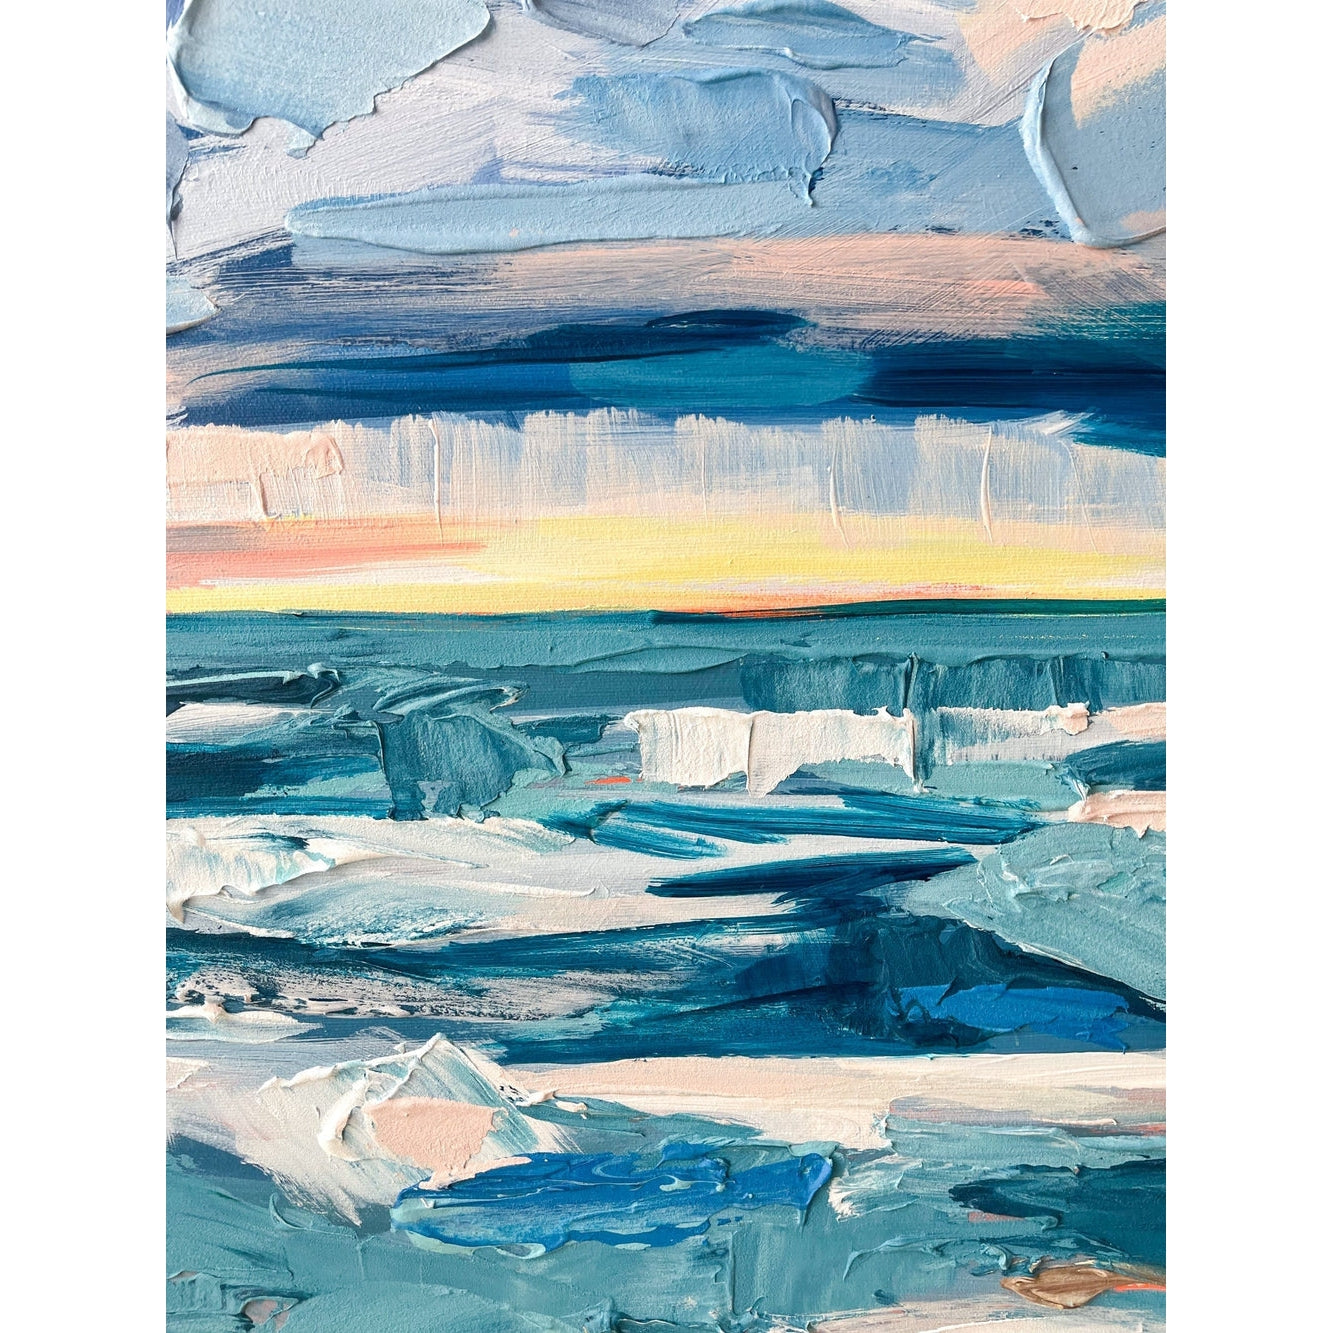 Open Waters, 30x40-Amy Dixon Art-Amy Dixon Art